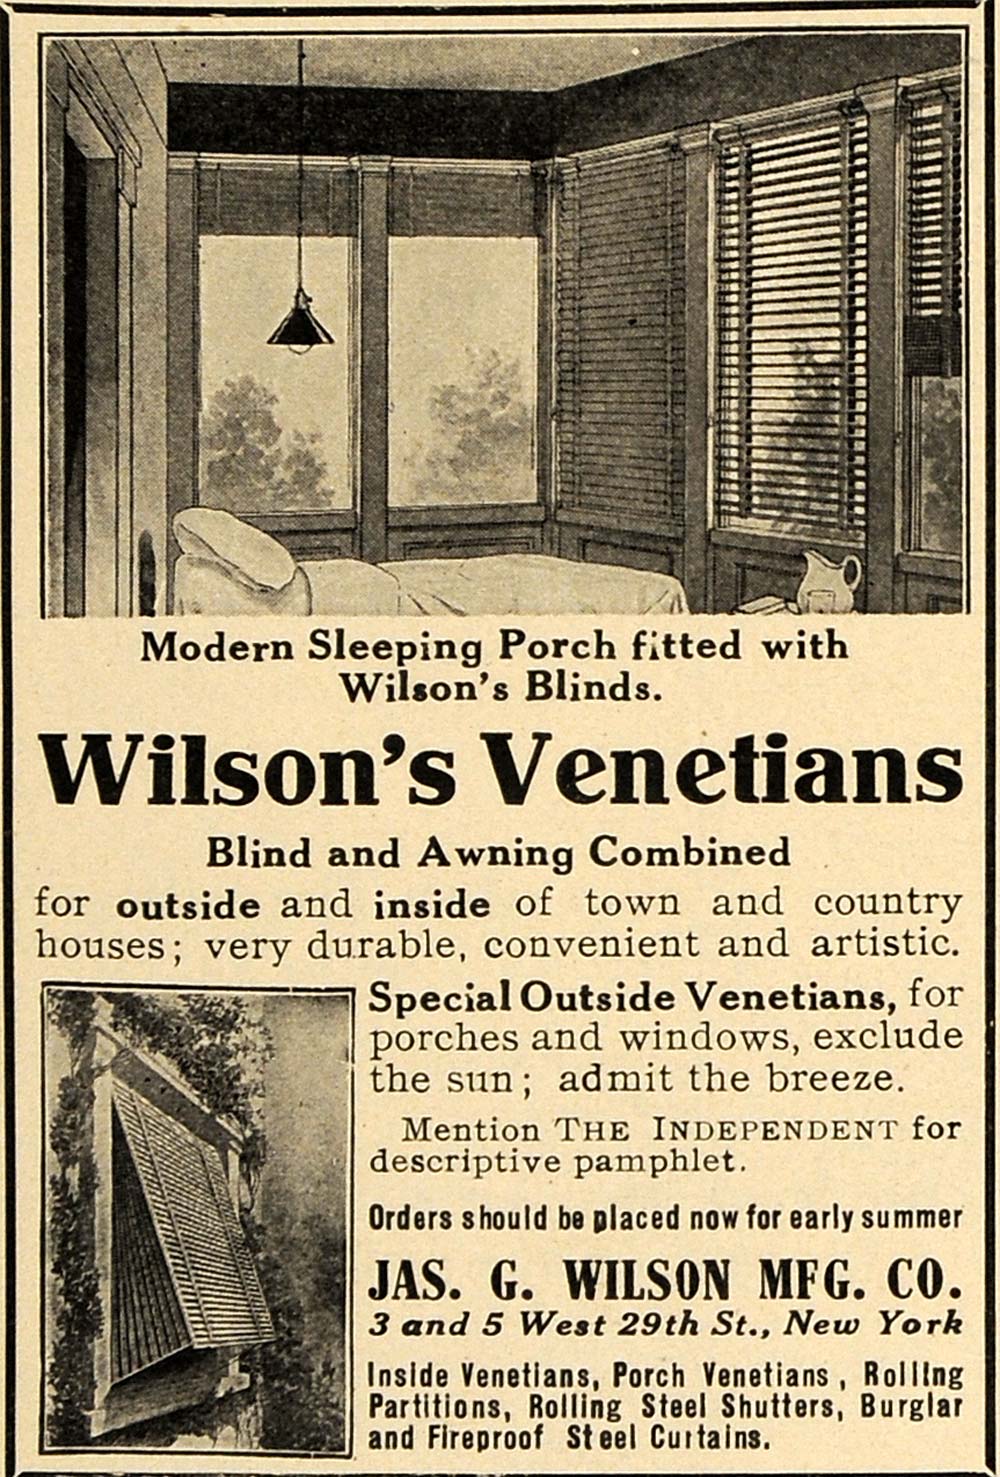 1910 Ad Jason Wilson Mfg. NY Venetian Blinds Window - ORIGINAL ADVERTISING TOM2